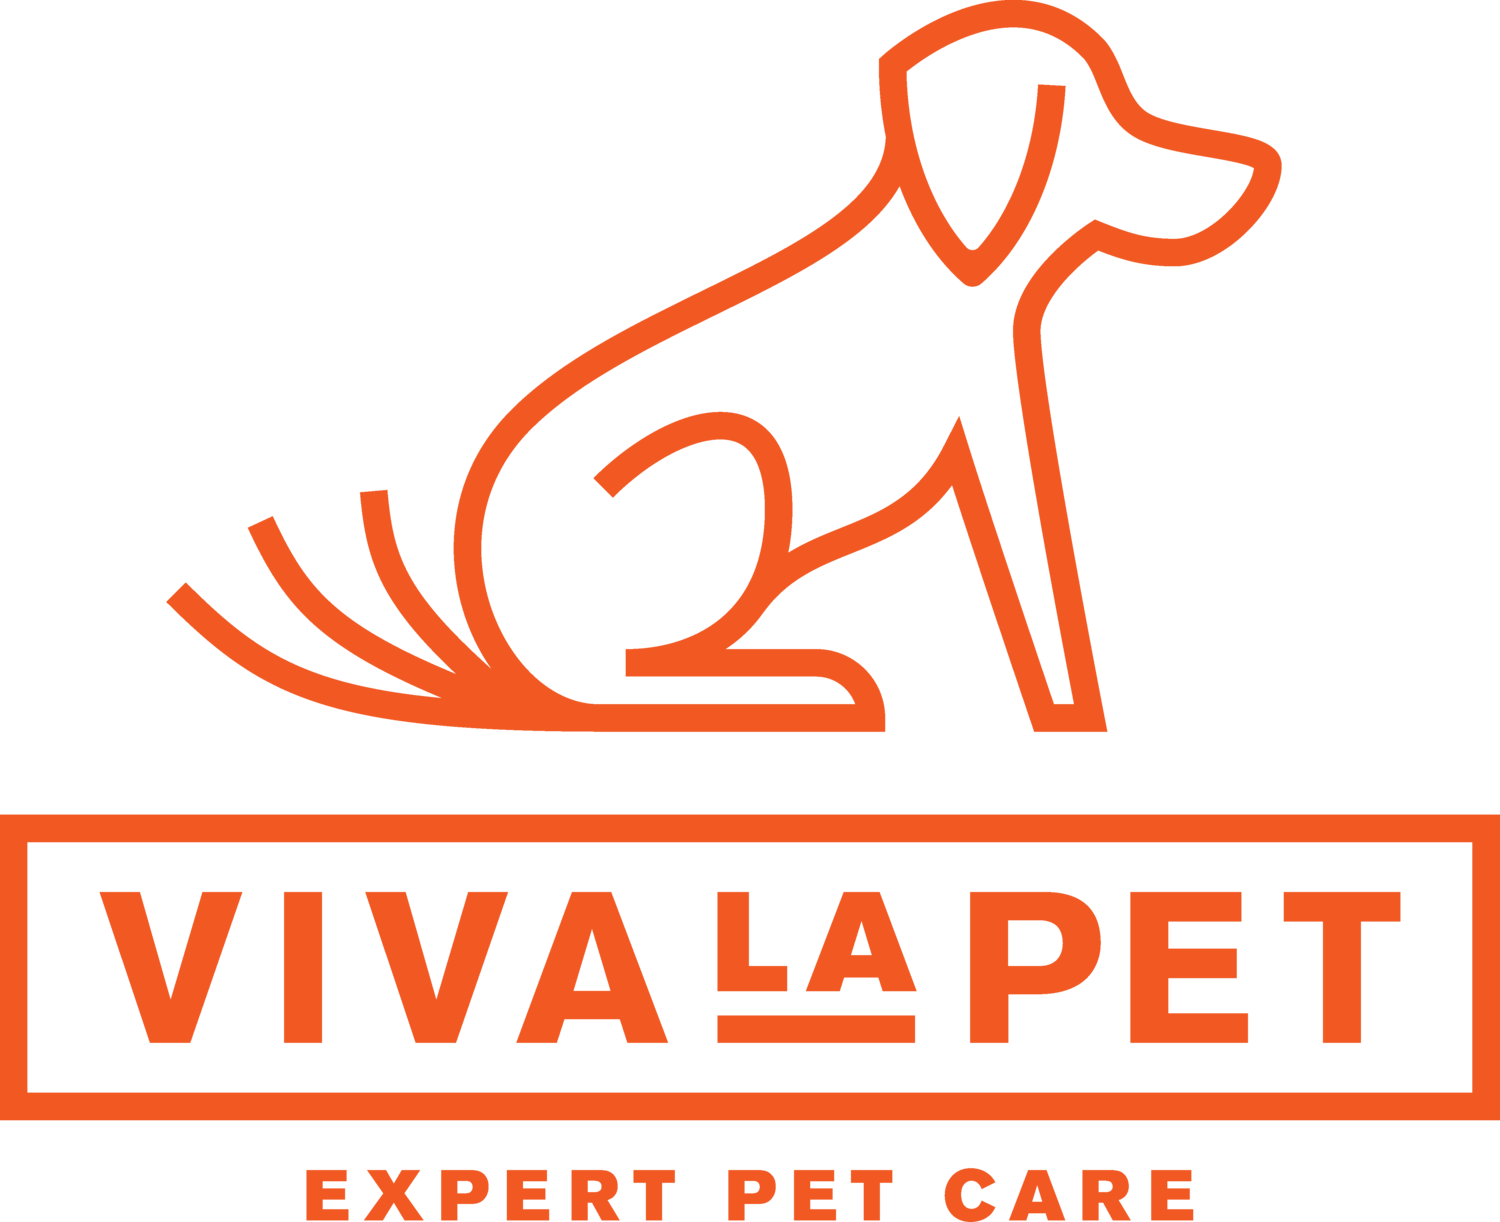 Pet Care Experts|Dog Walking|Pet Sitting|Overnight Pet Sitting|